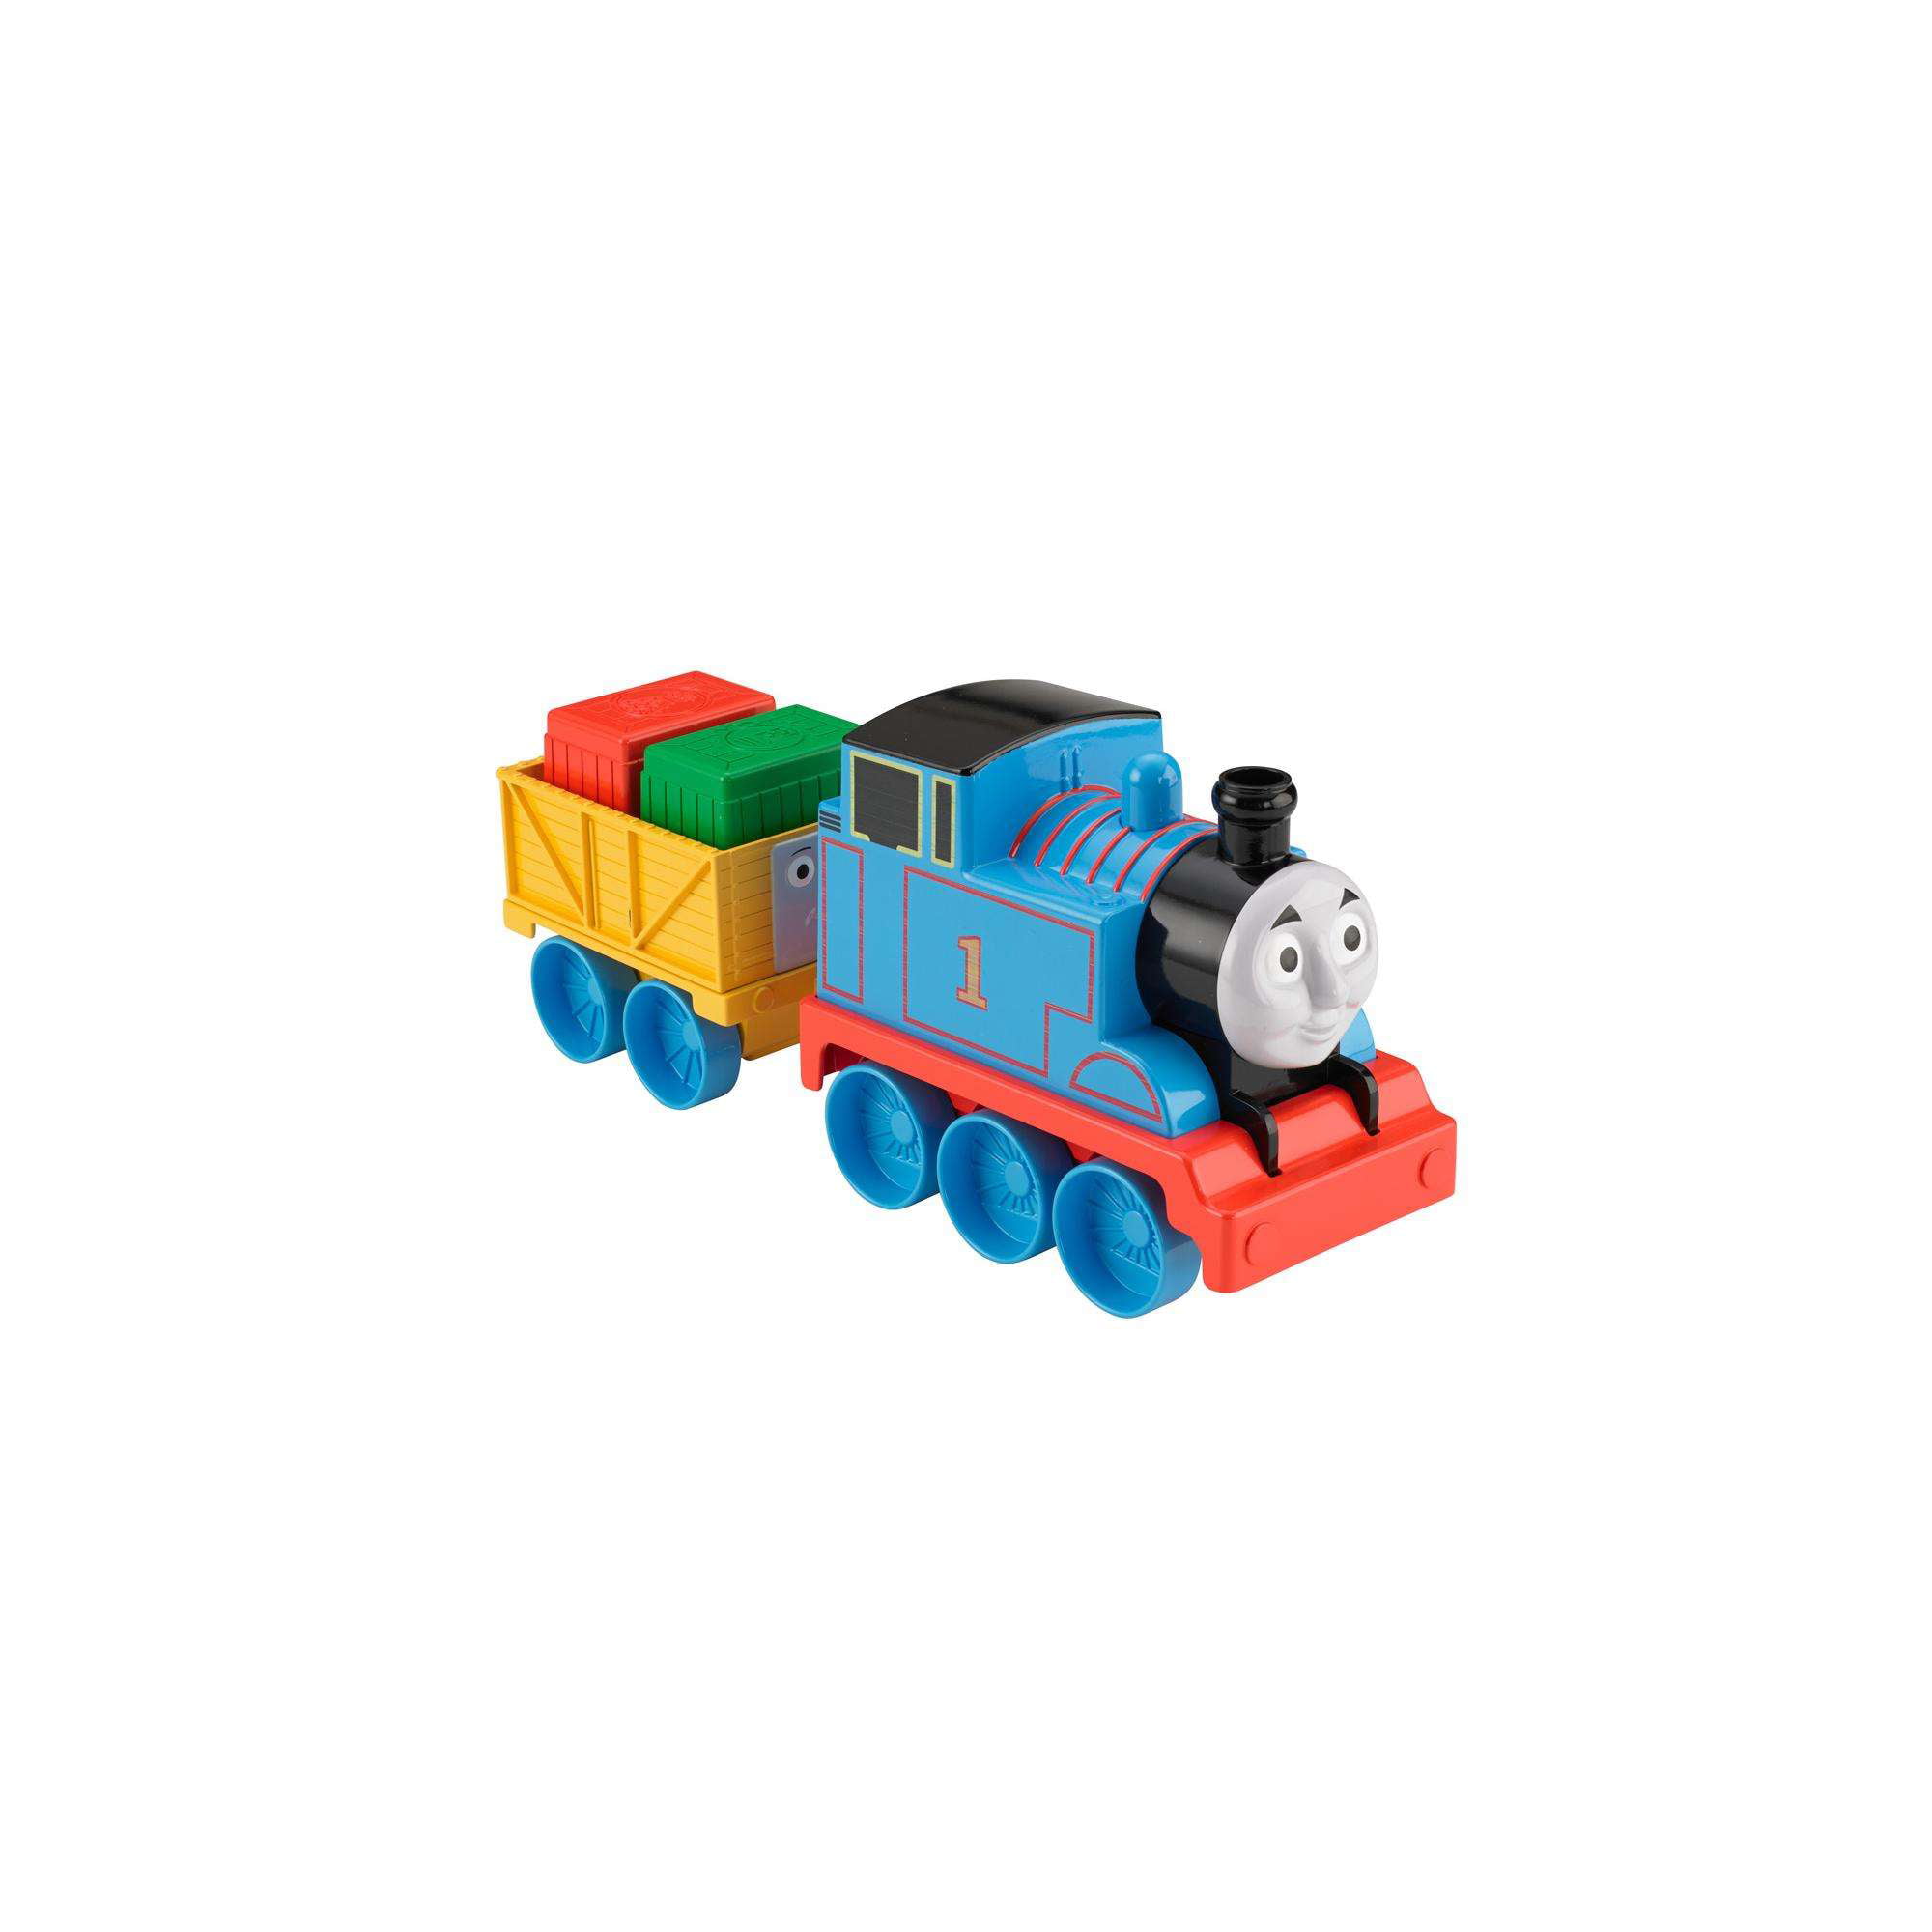 large thomas the train toy